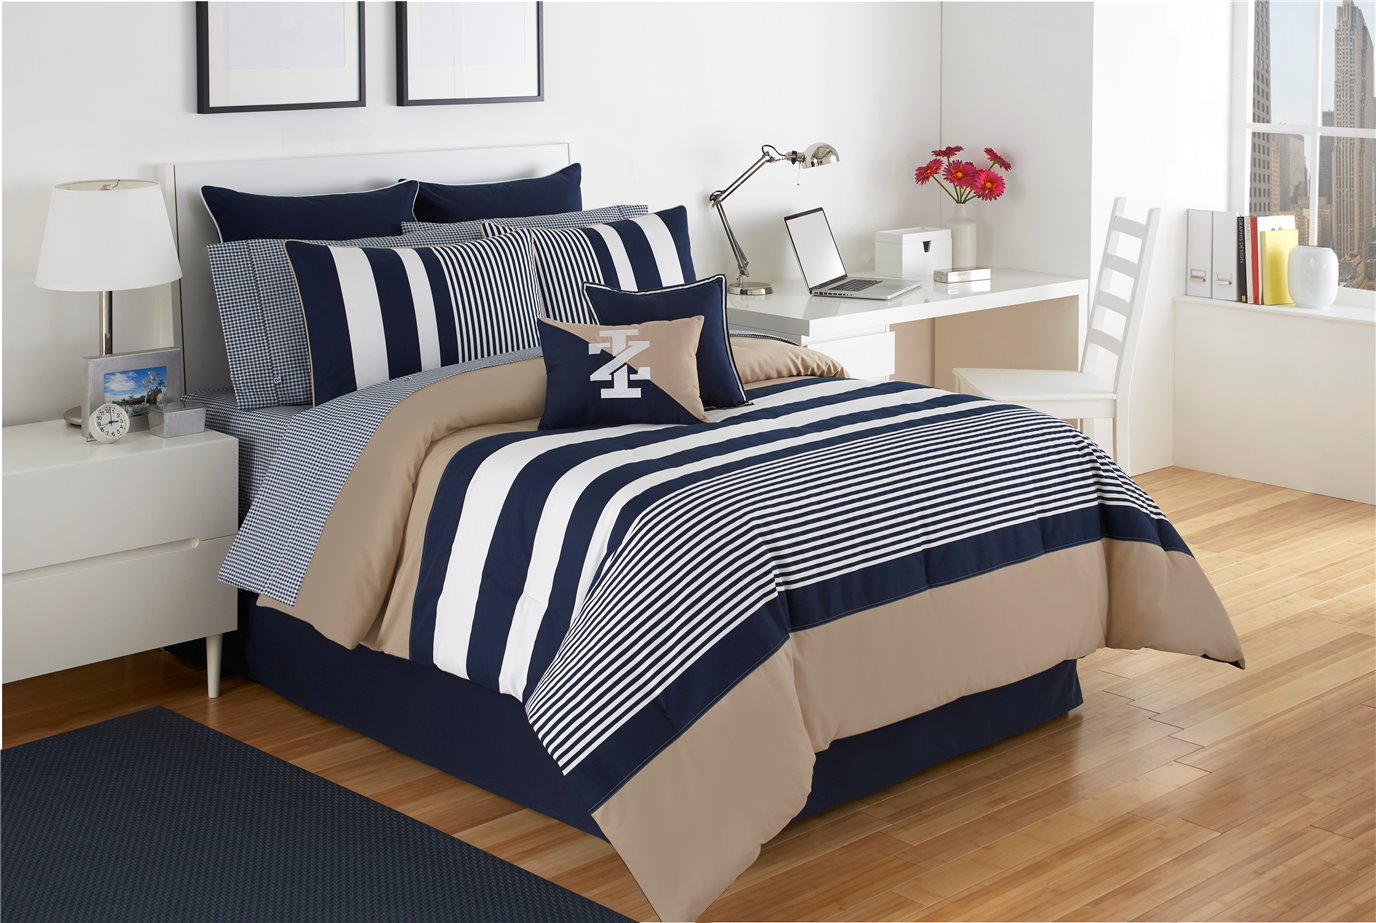 IZOD Classic Stripe King Comforter Set  (15" drop)